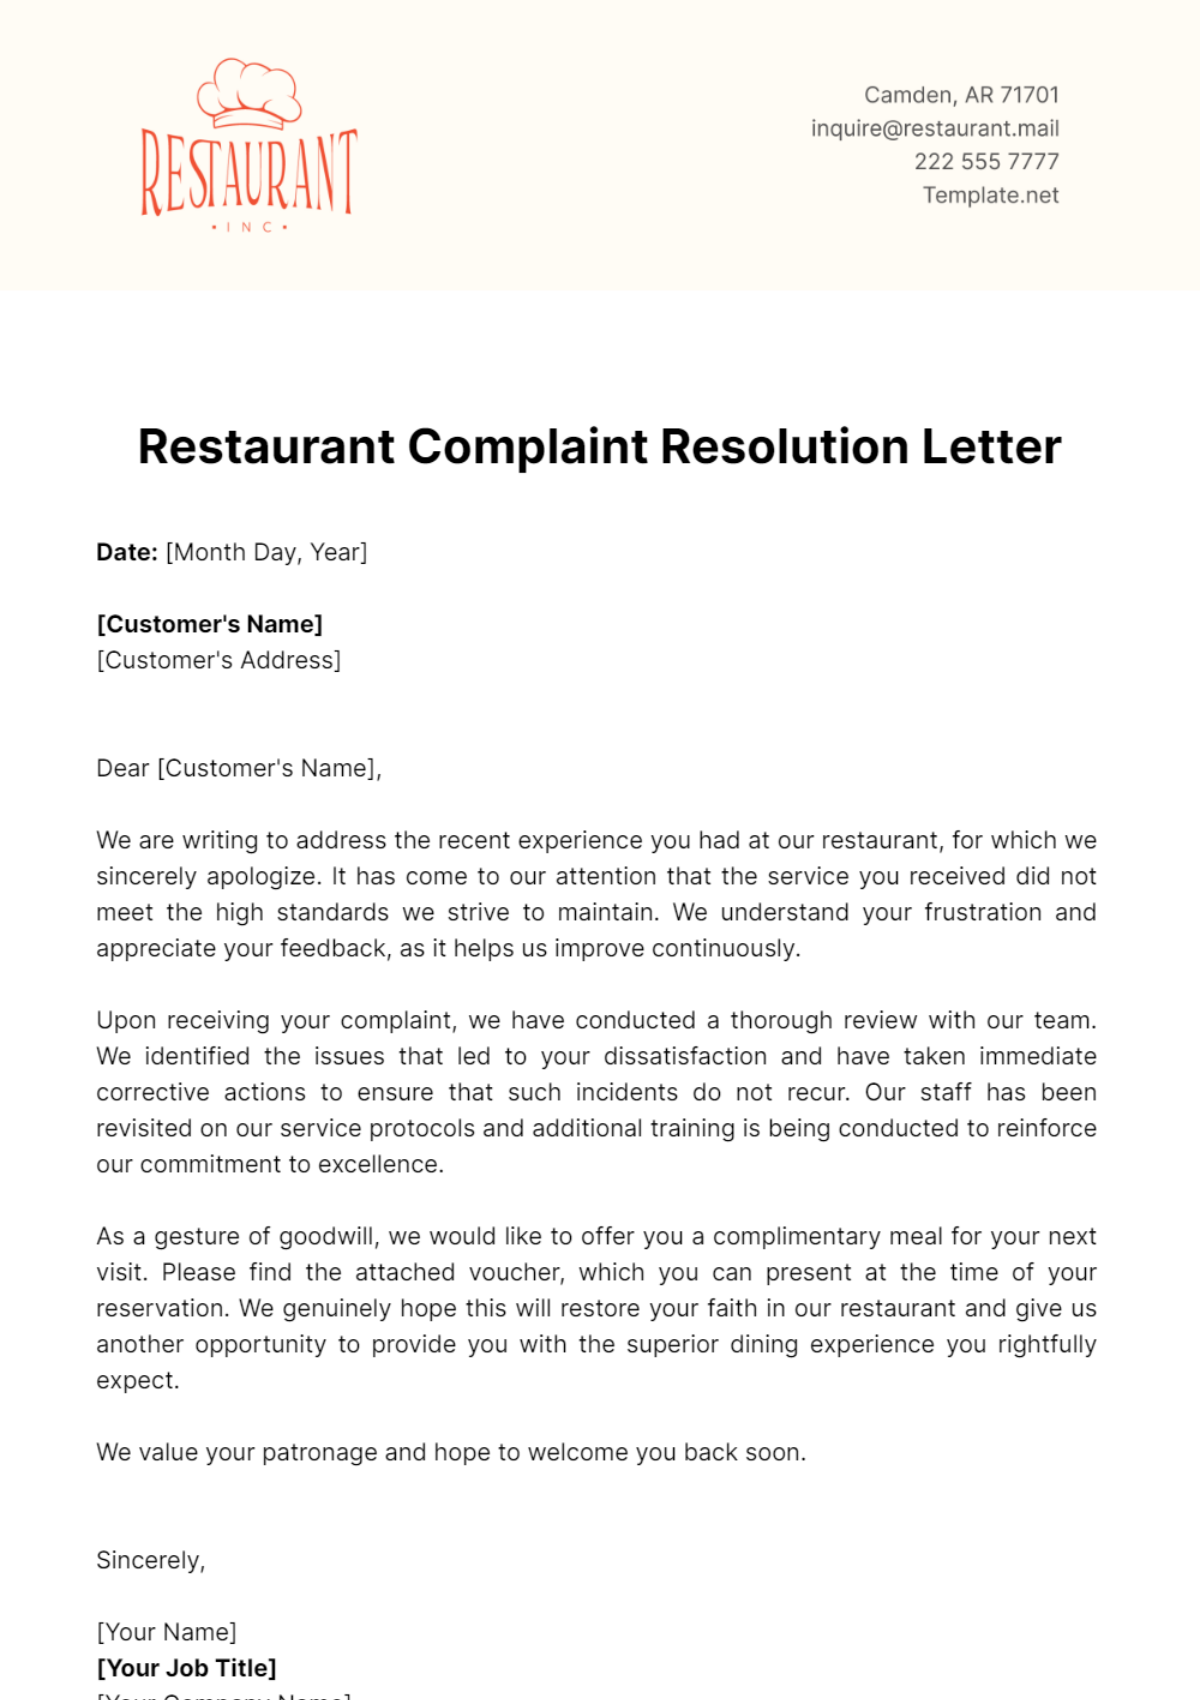 Free Restaurant Complaint Resolution Letter Template